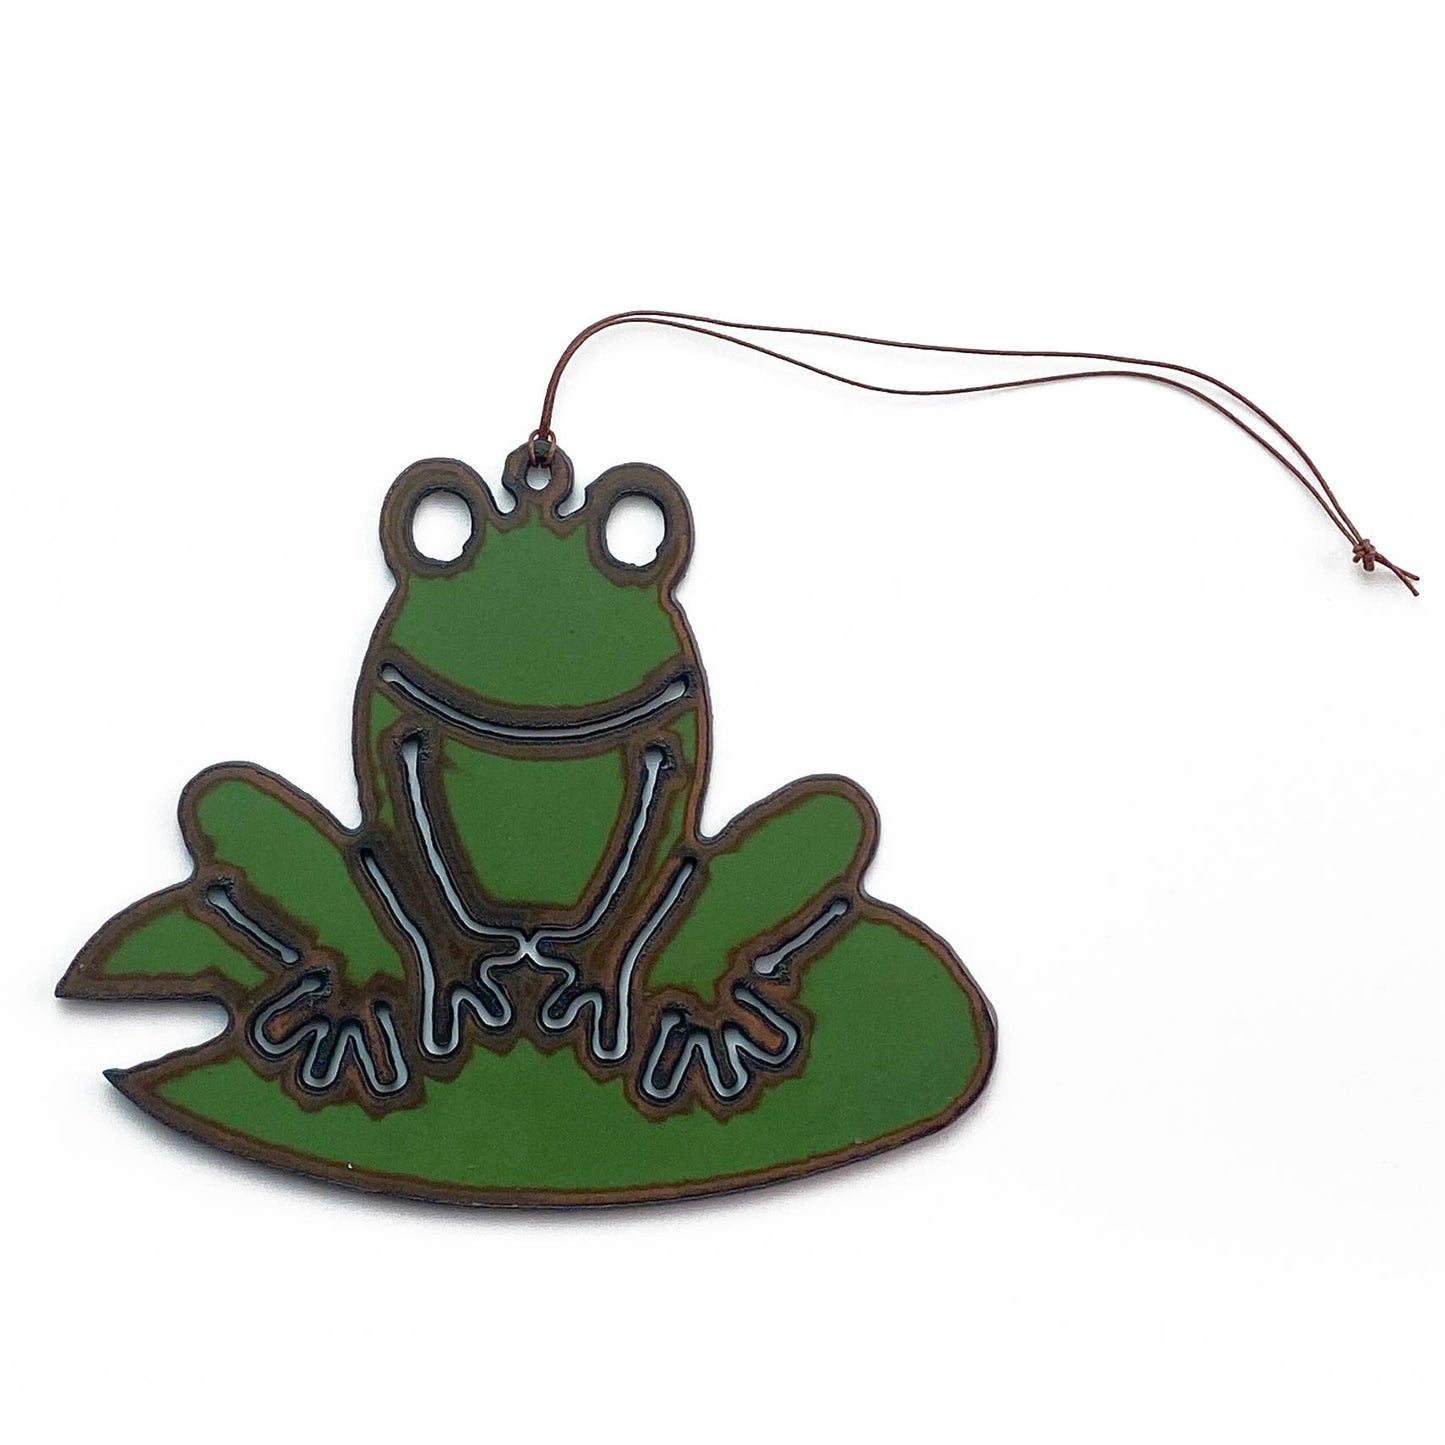 Frog Ornament rustic metal art recycled